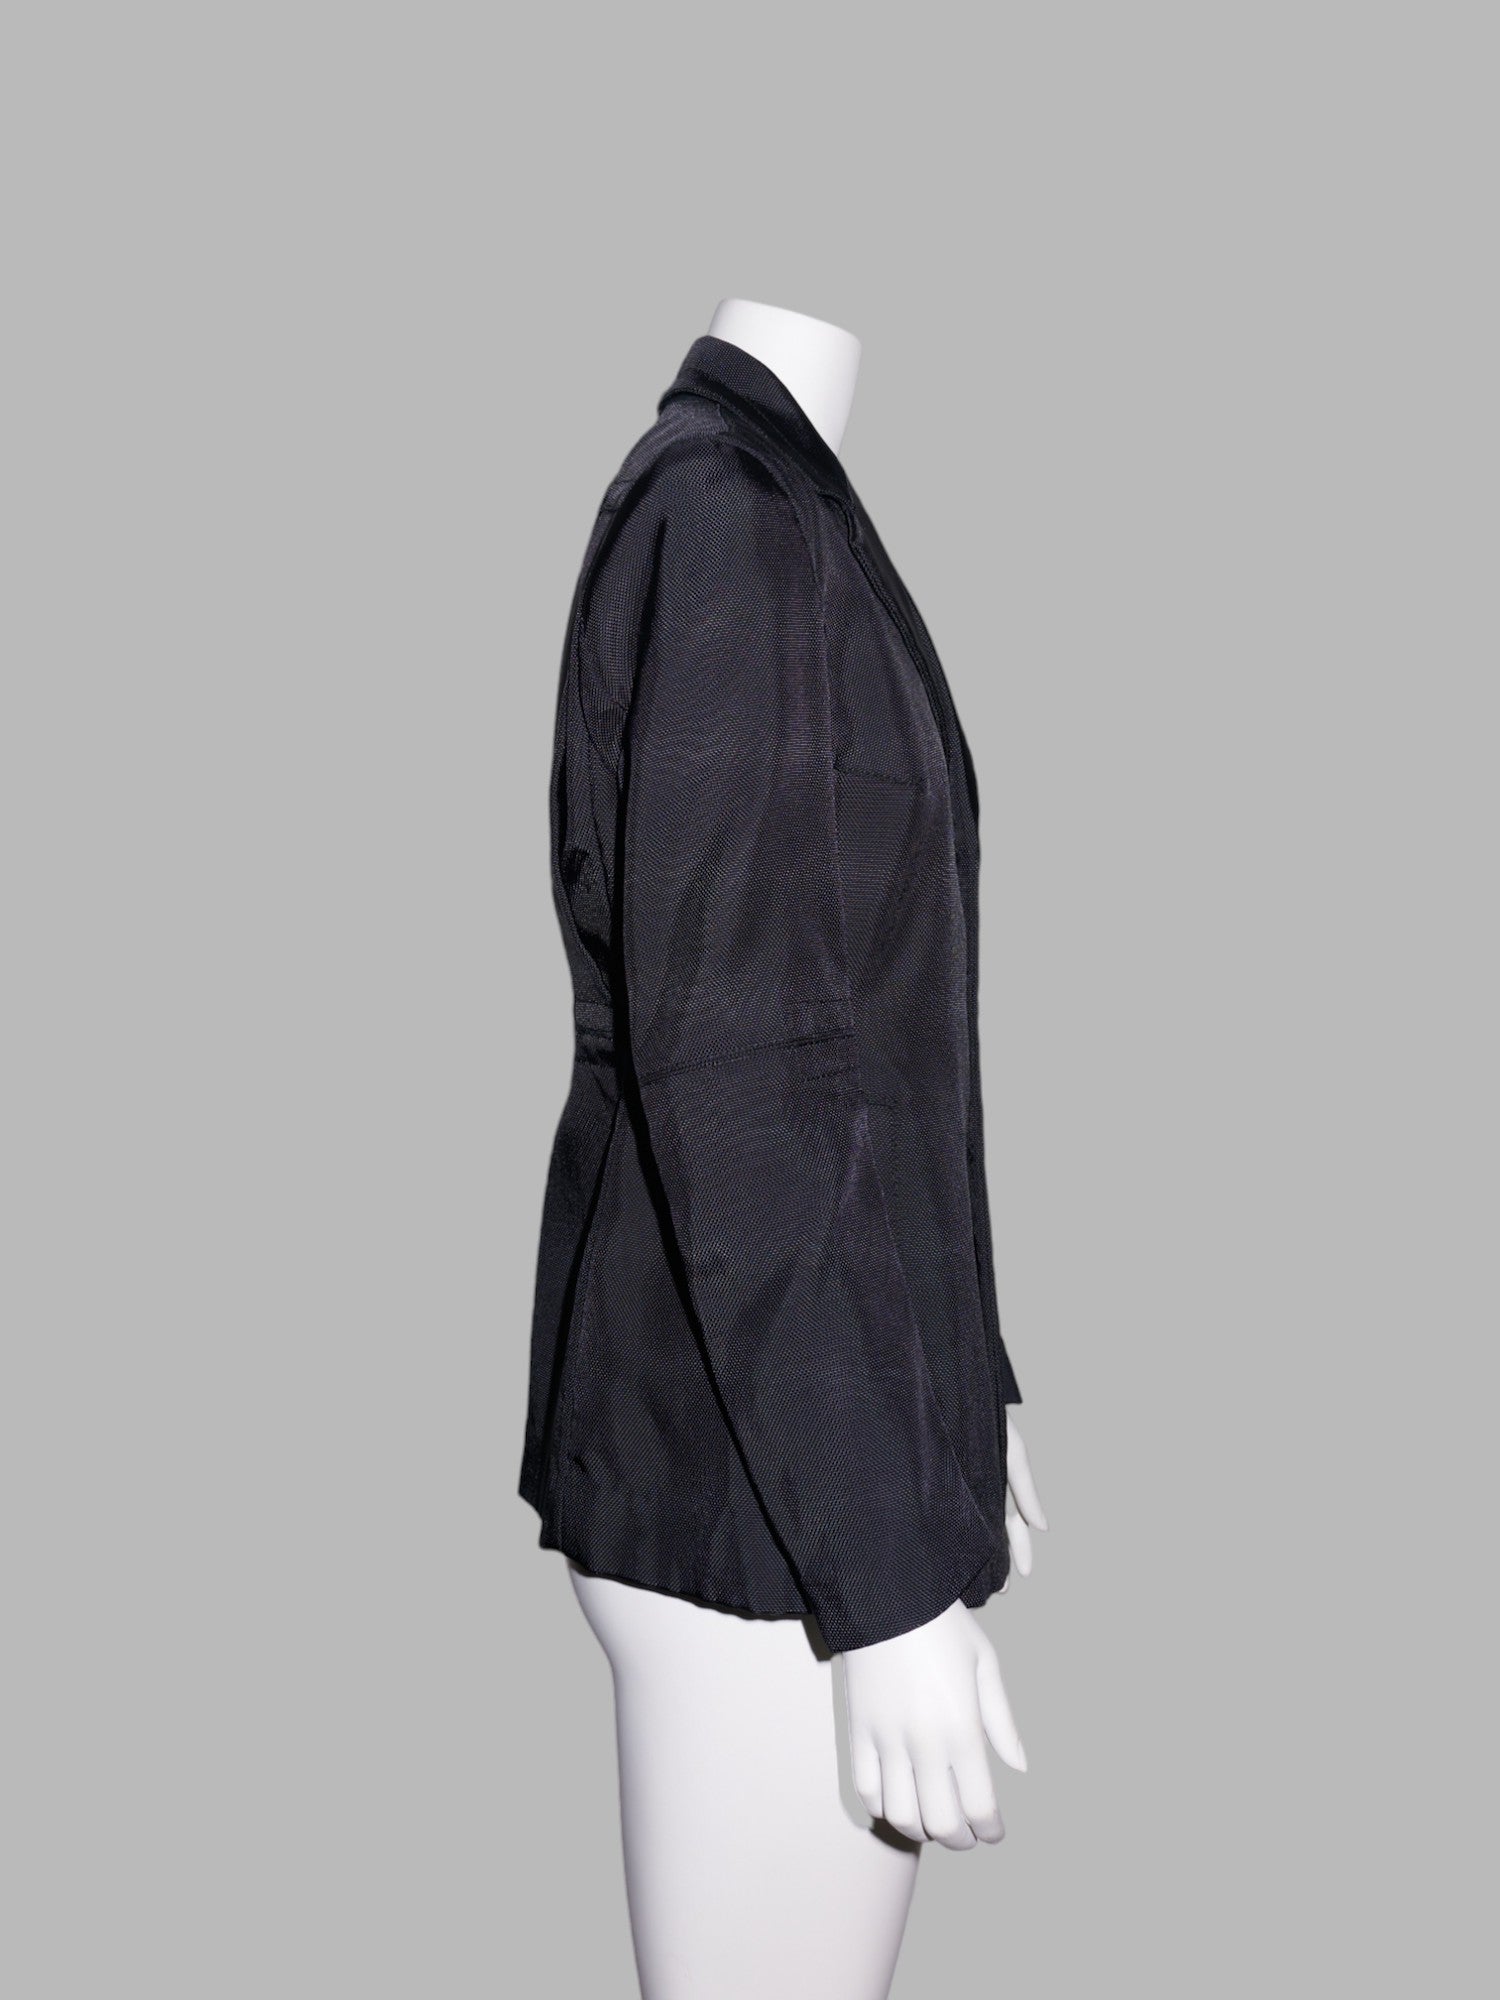 Dirk Bikkembergs Hommes Pour La Femme 1990s black ballistic nylon three button blazer